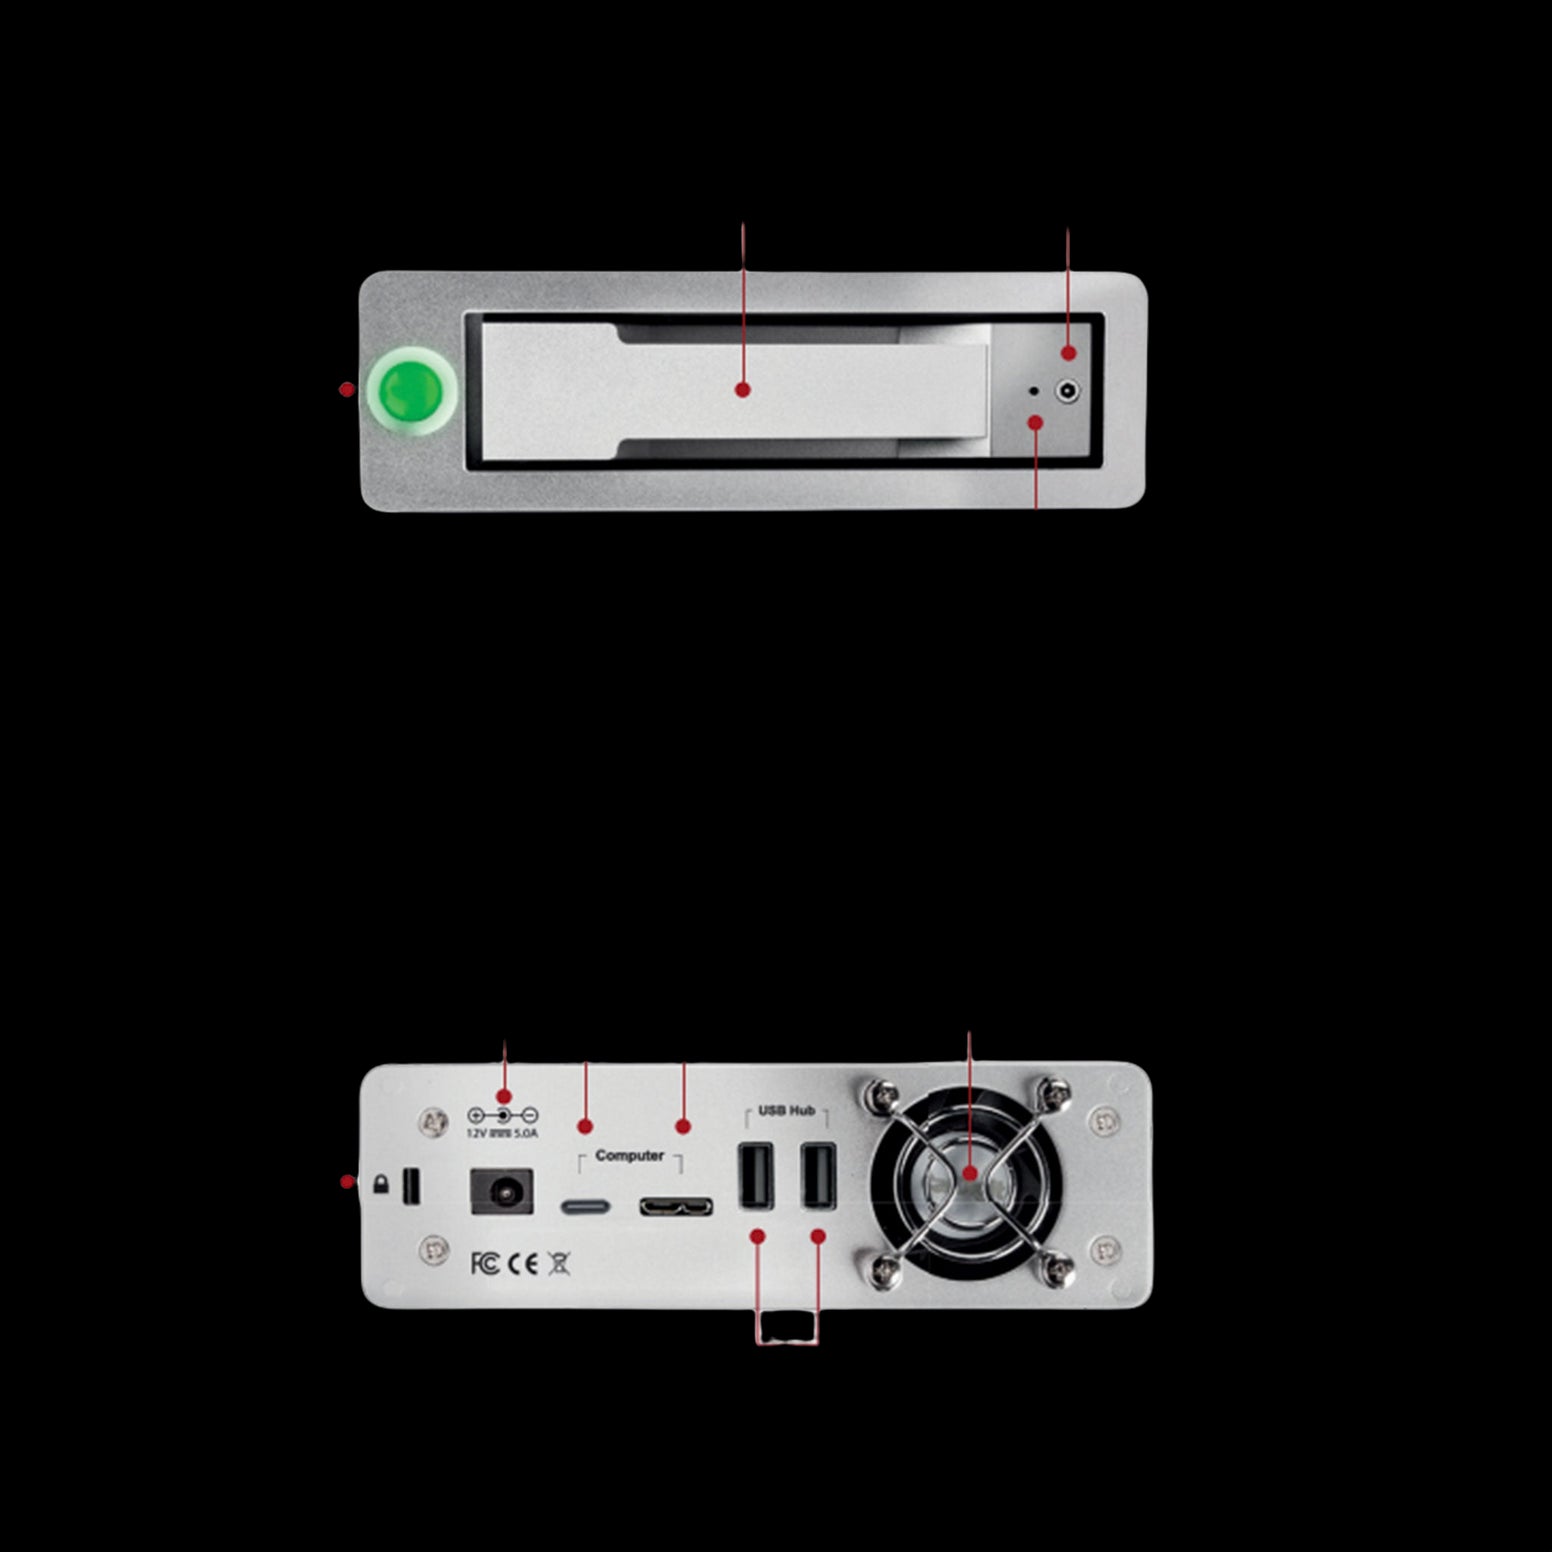 CalDigit 4TB HDD AV Pro 2 USB-C External Drive - Discontinued